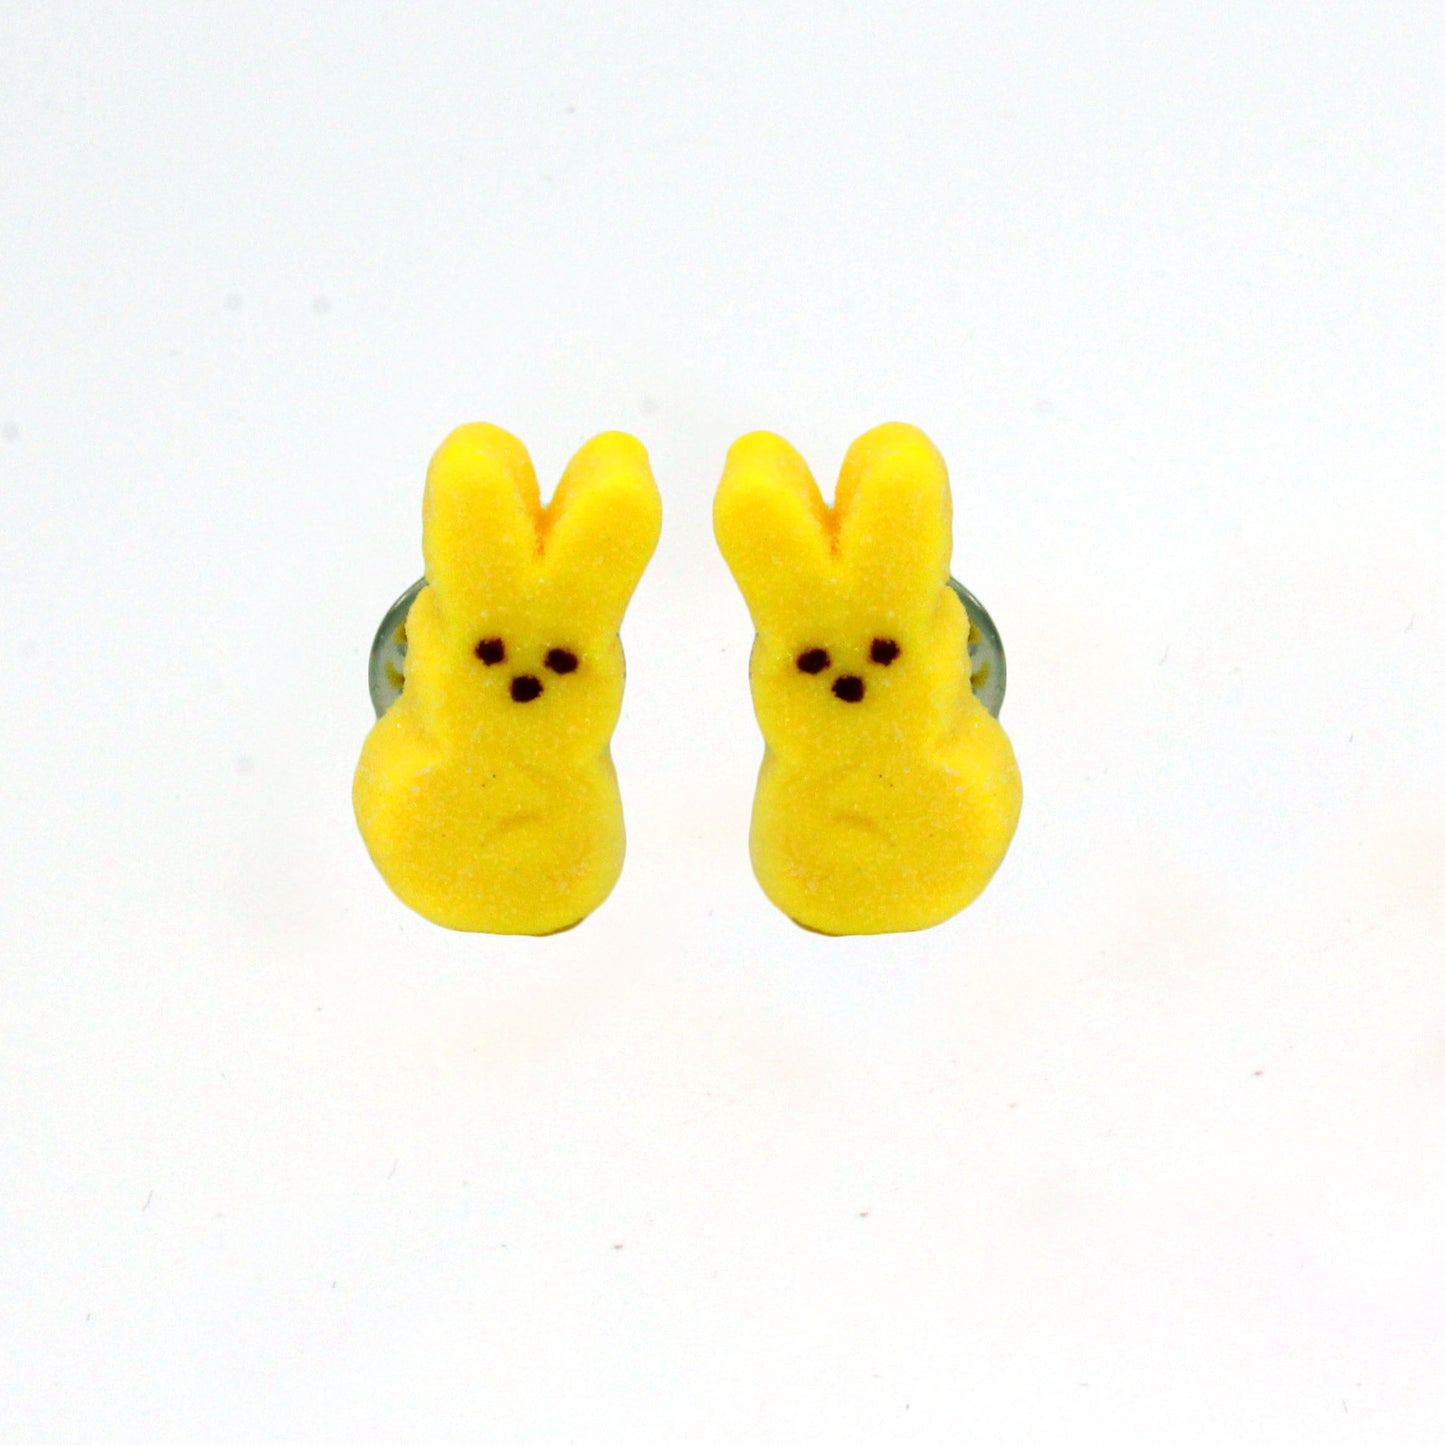 Marshmallow Bunny Stud Earrings - Hypoallergenic Steel - Fatally Feminine Designs